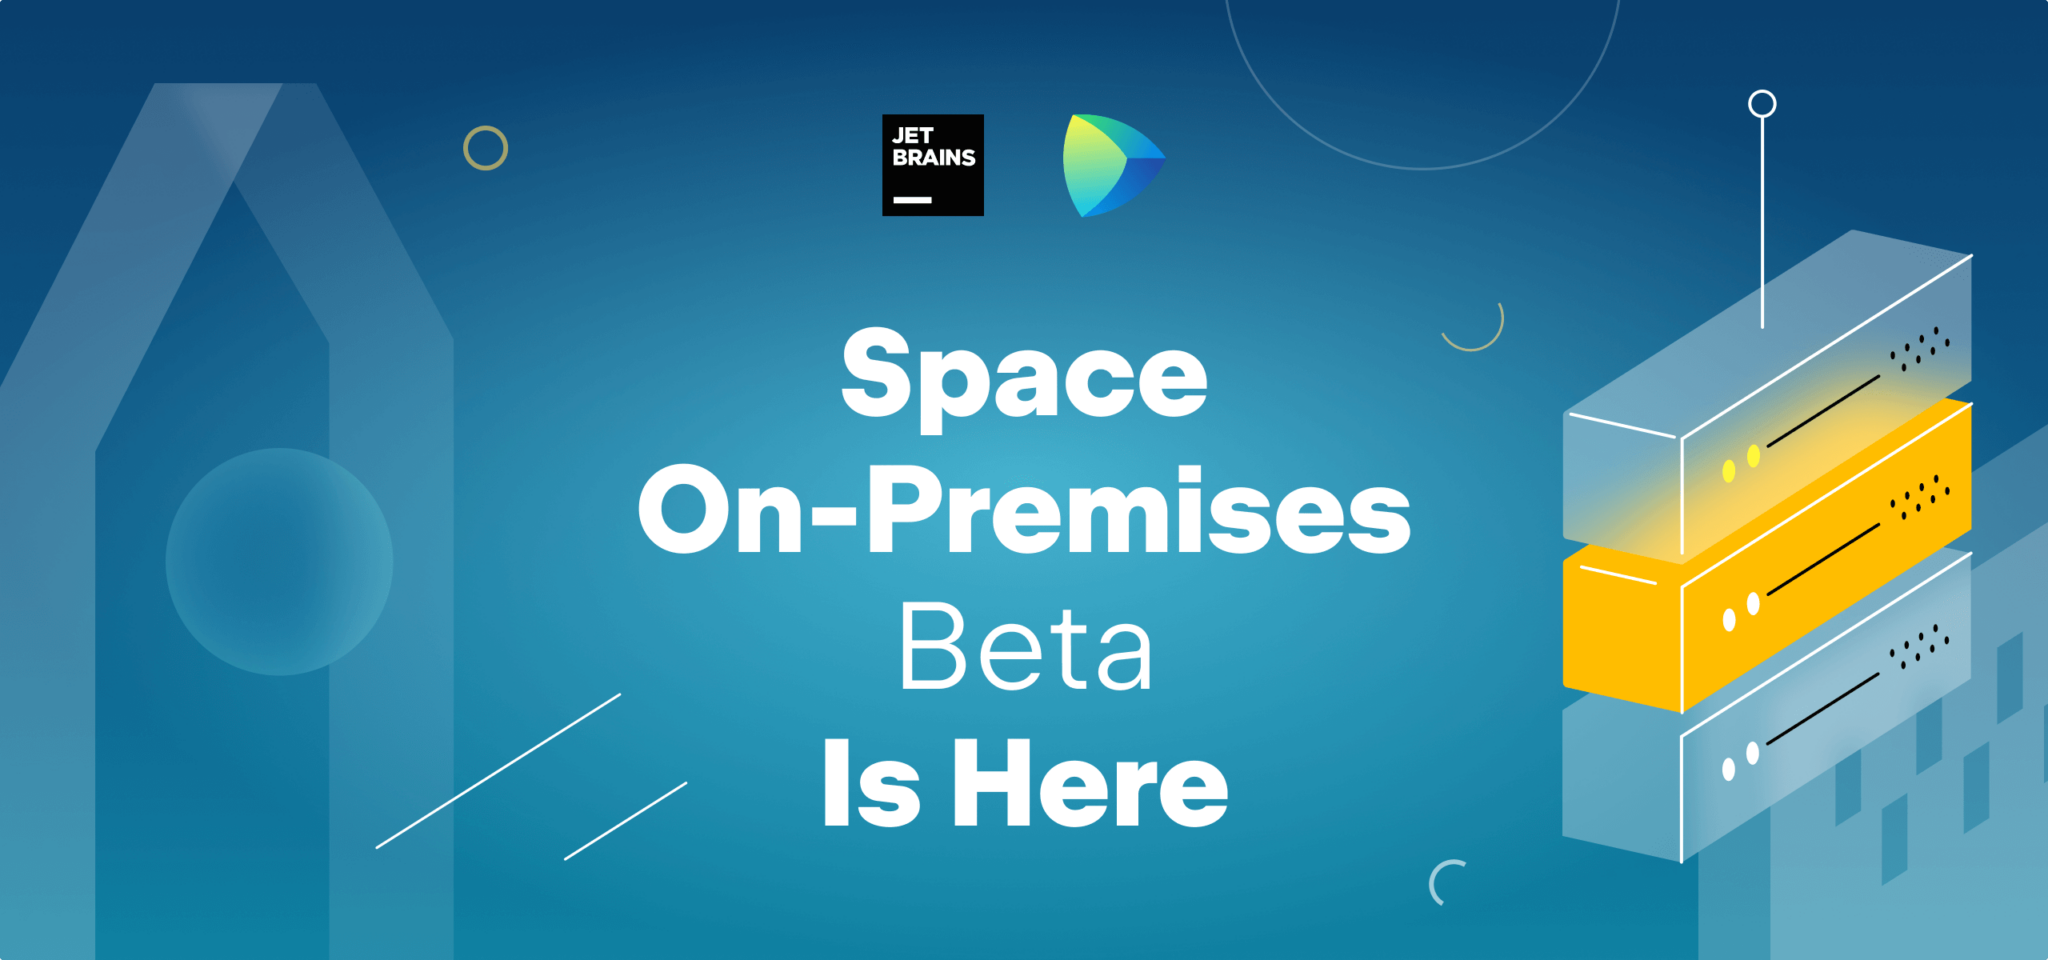 download jetbrains space on premise